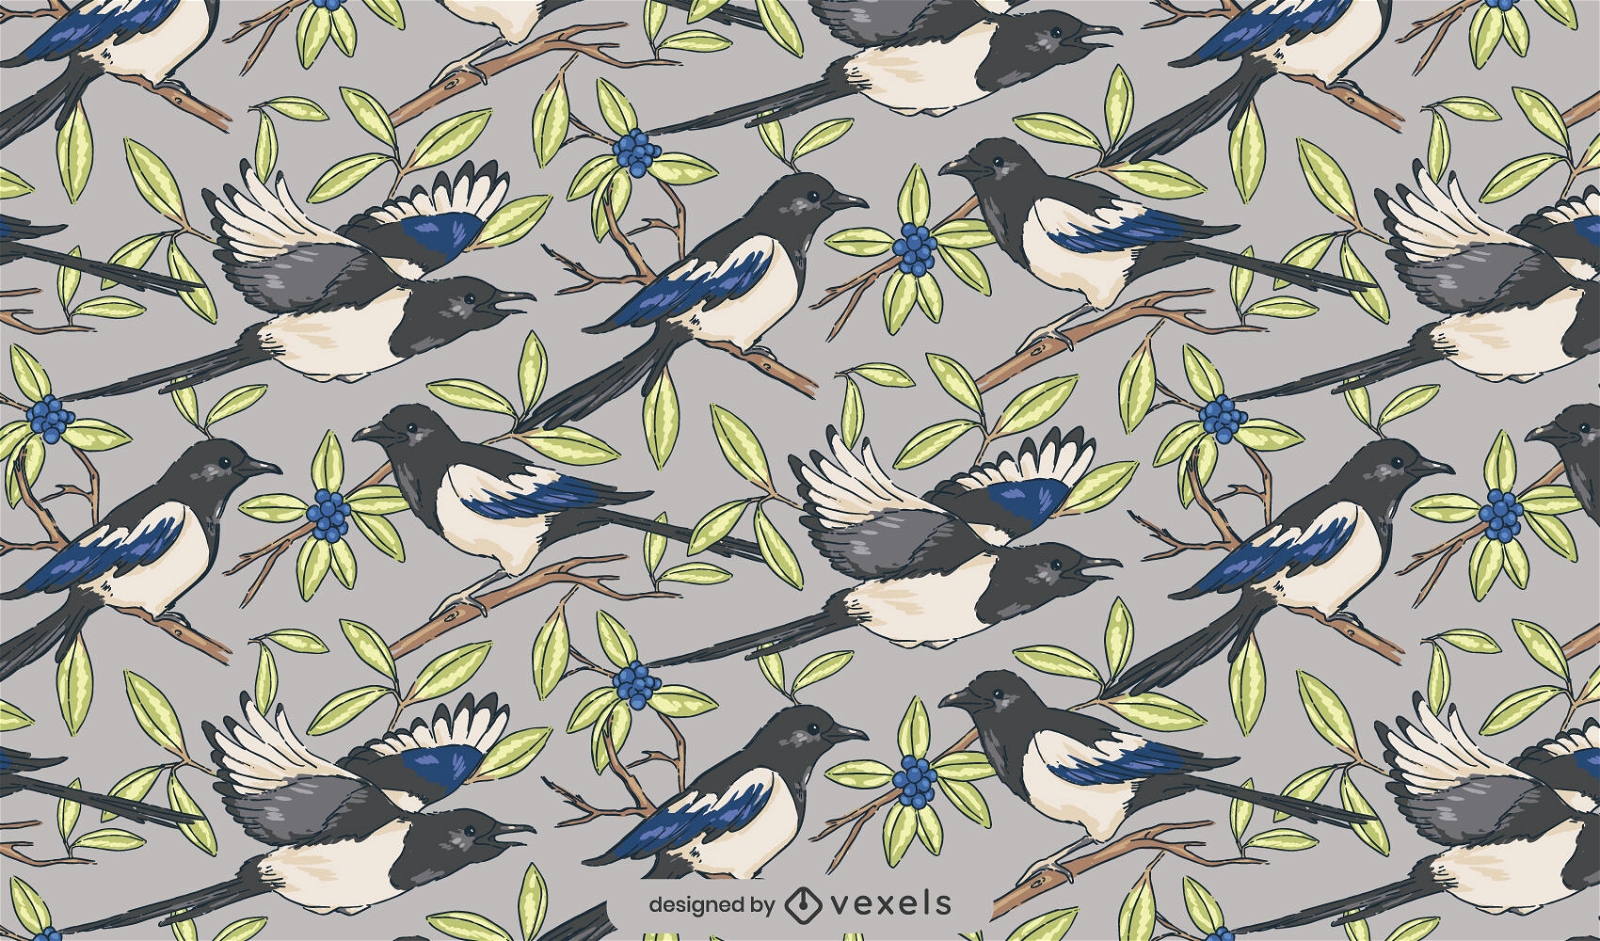 Bird animals and leaves pattern design